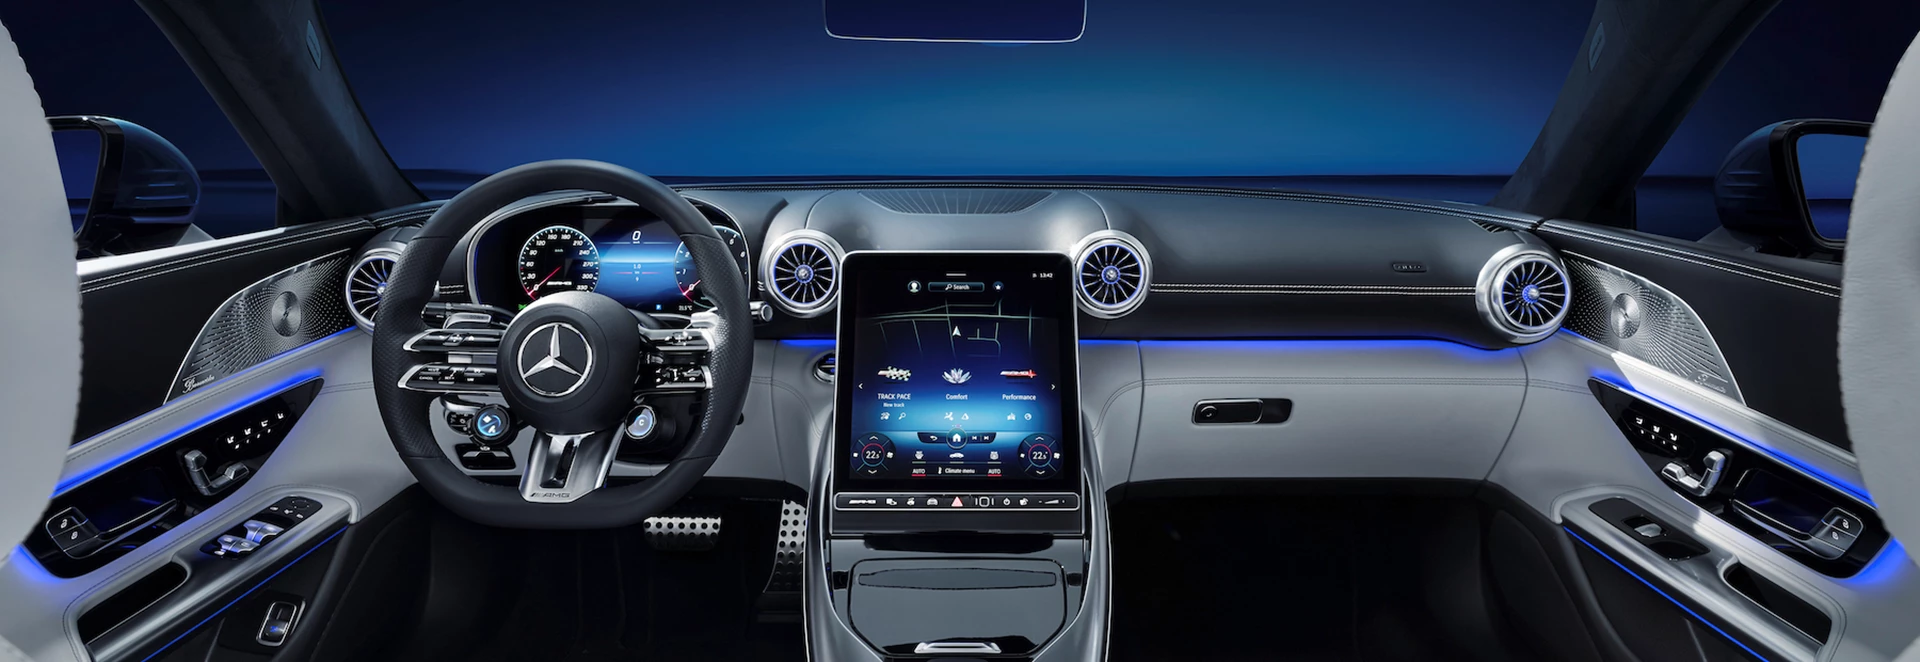 Mercedes-AMG reveals interior of new SL convertible 